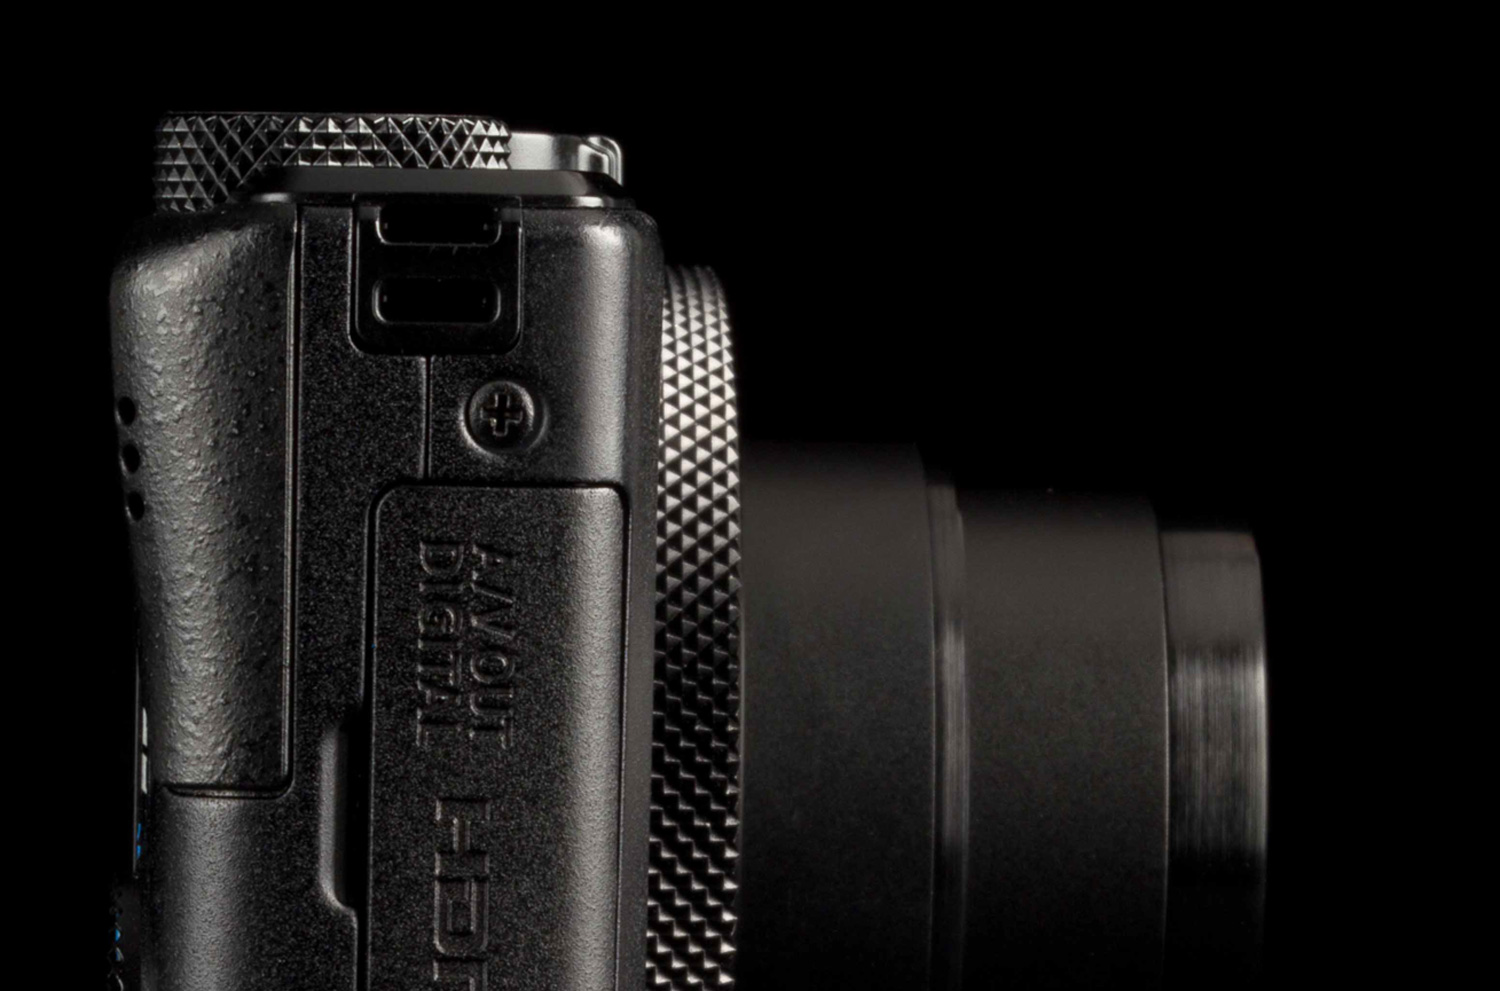 Canon PowerShot S110 Review | Digital Trends